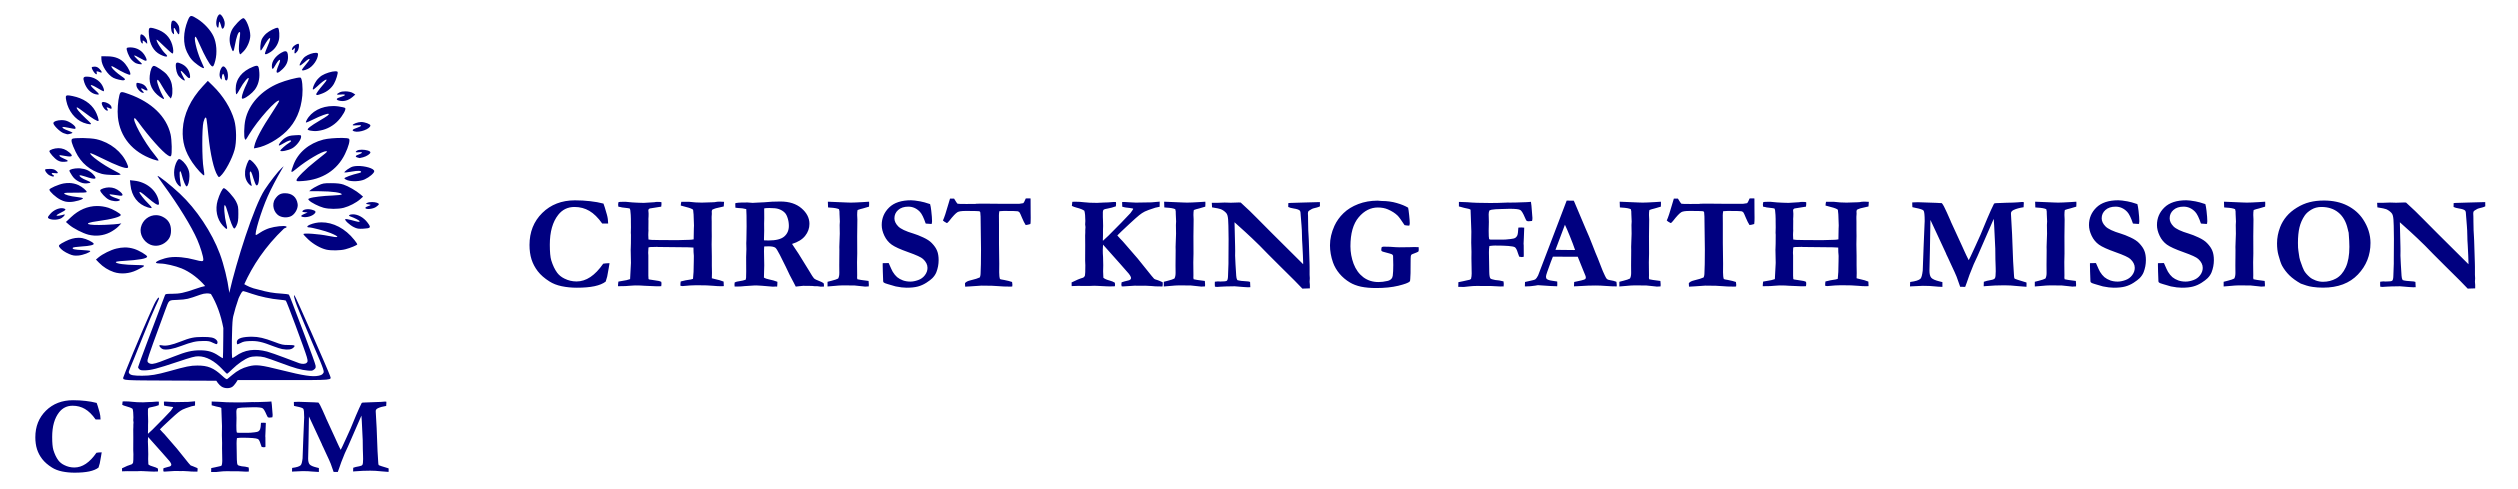 Logo for Christ King Faith Mission